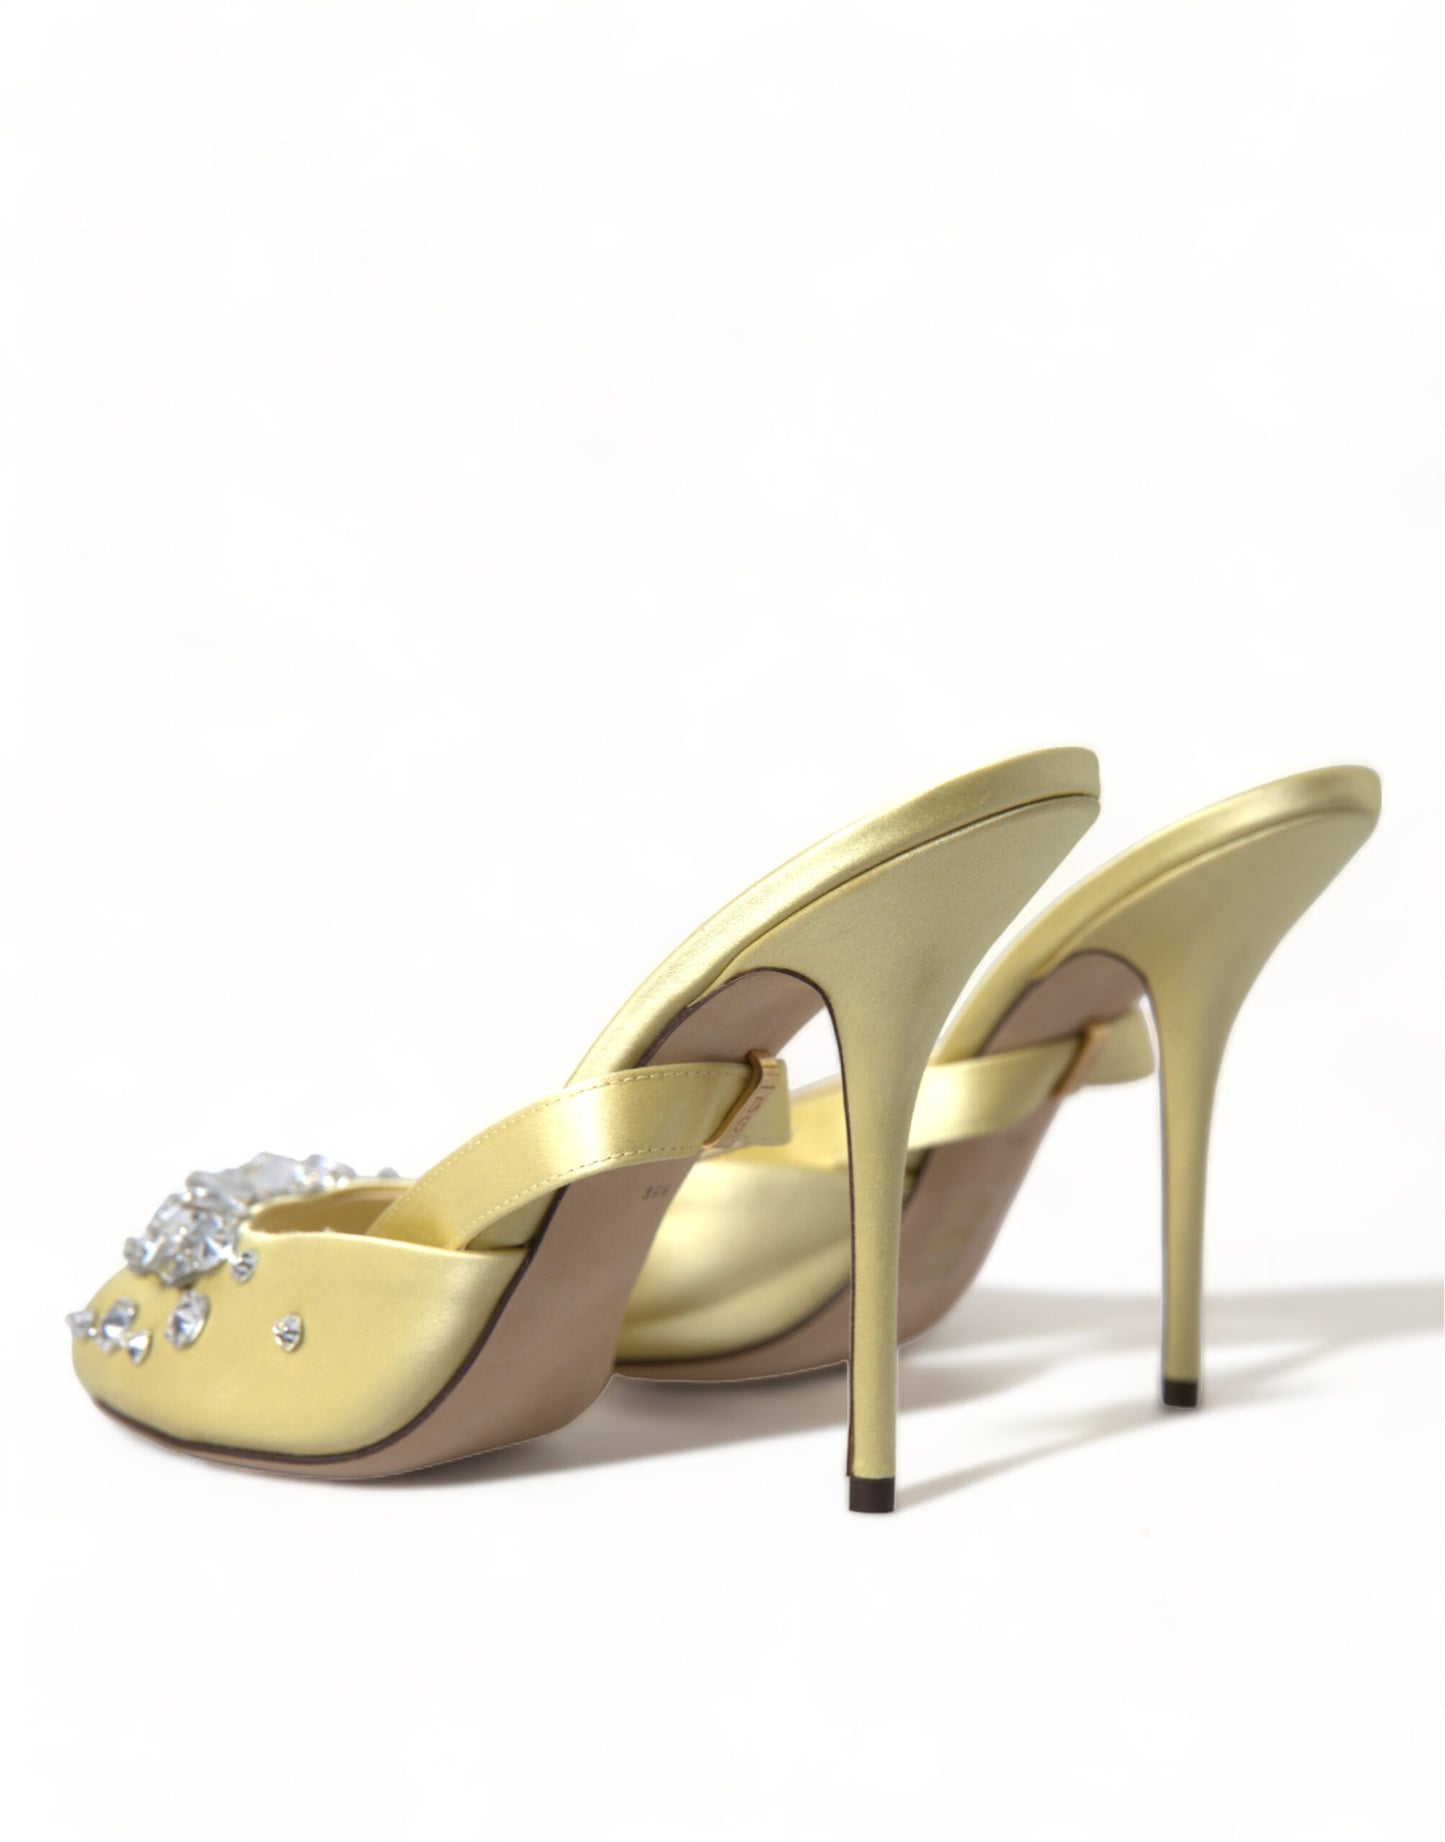 Dolce & Gabbana Yellow Satin Crystal Mary Janes Sandals - DEA STILOSA MILANO